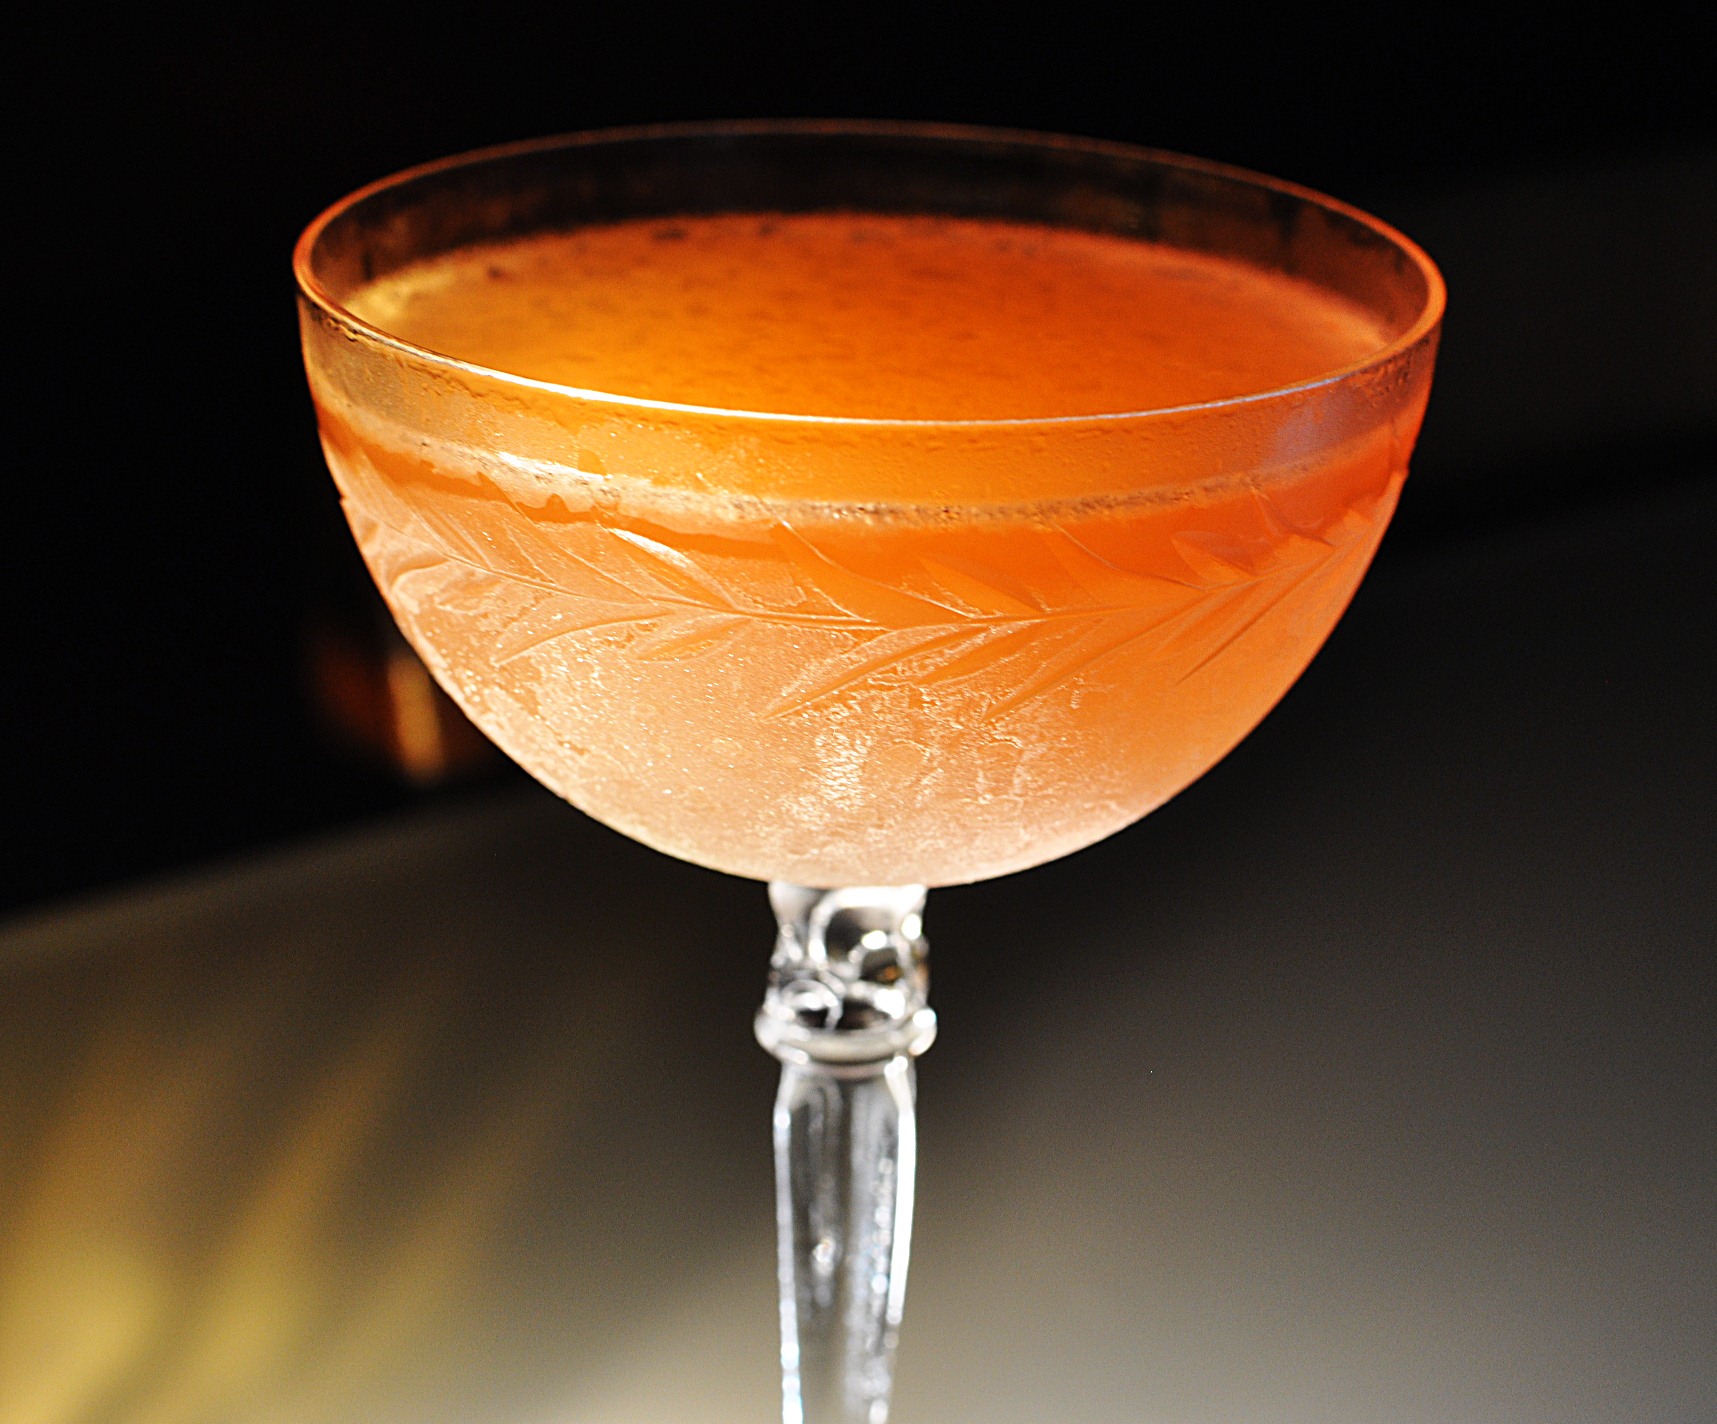 Pegu Cocktail